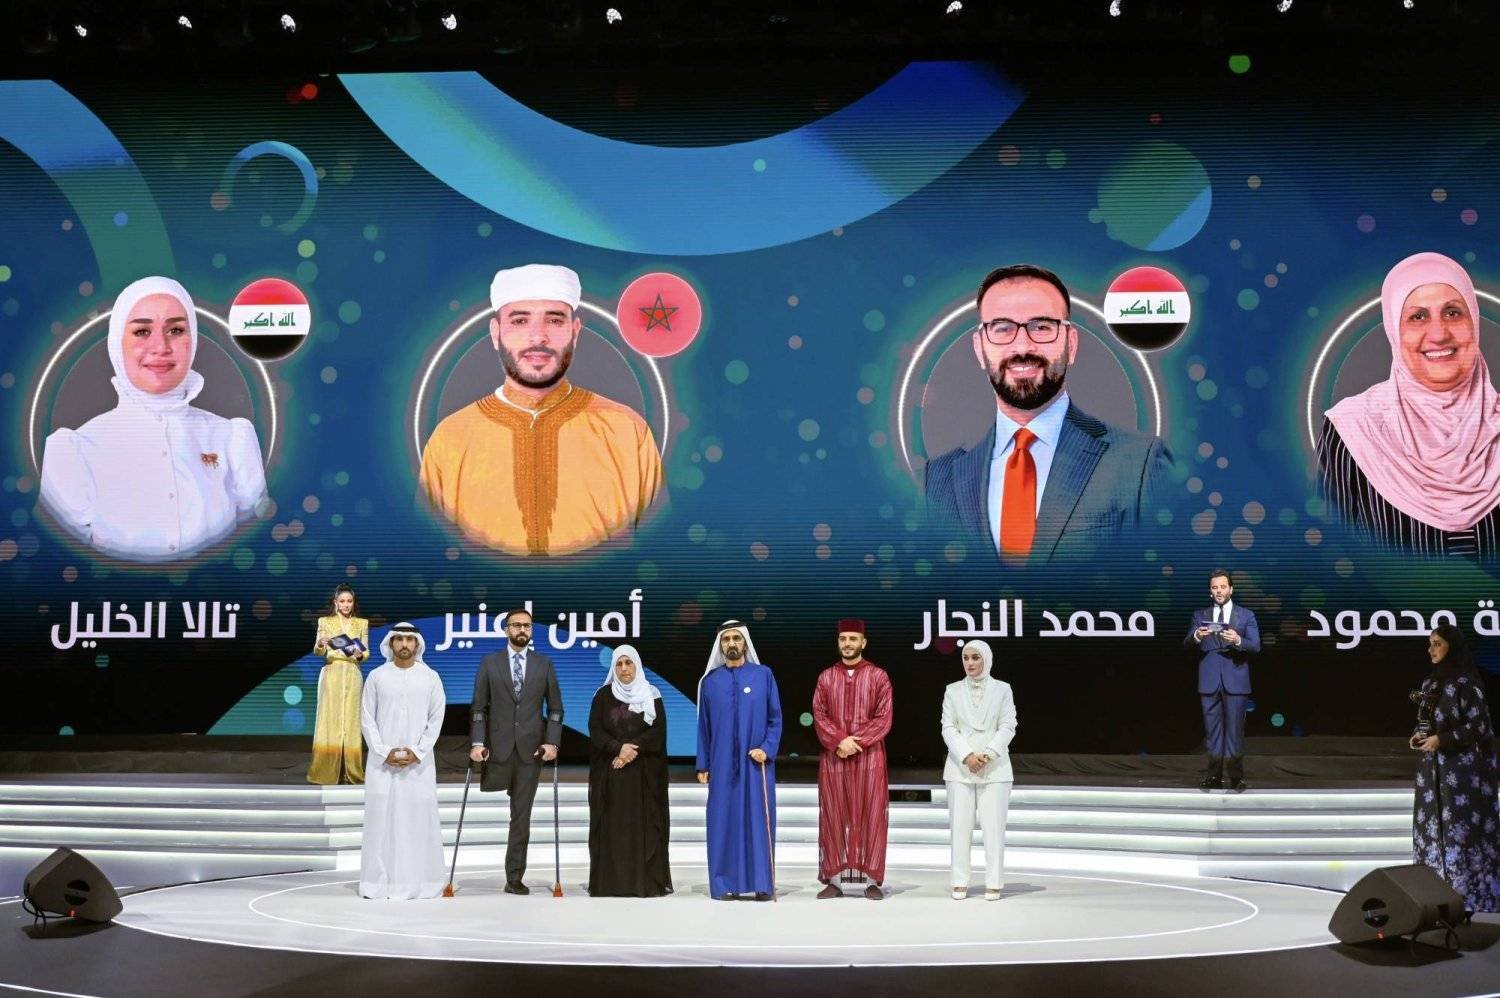 Sheikh Mohammed bin Rashid Al Maktoum crowned the four Arab Hope Makers finalists, awarding them a financial reward of AED 1 million ($272,000) each. Asharq Al-Awsat